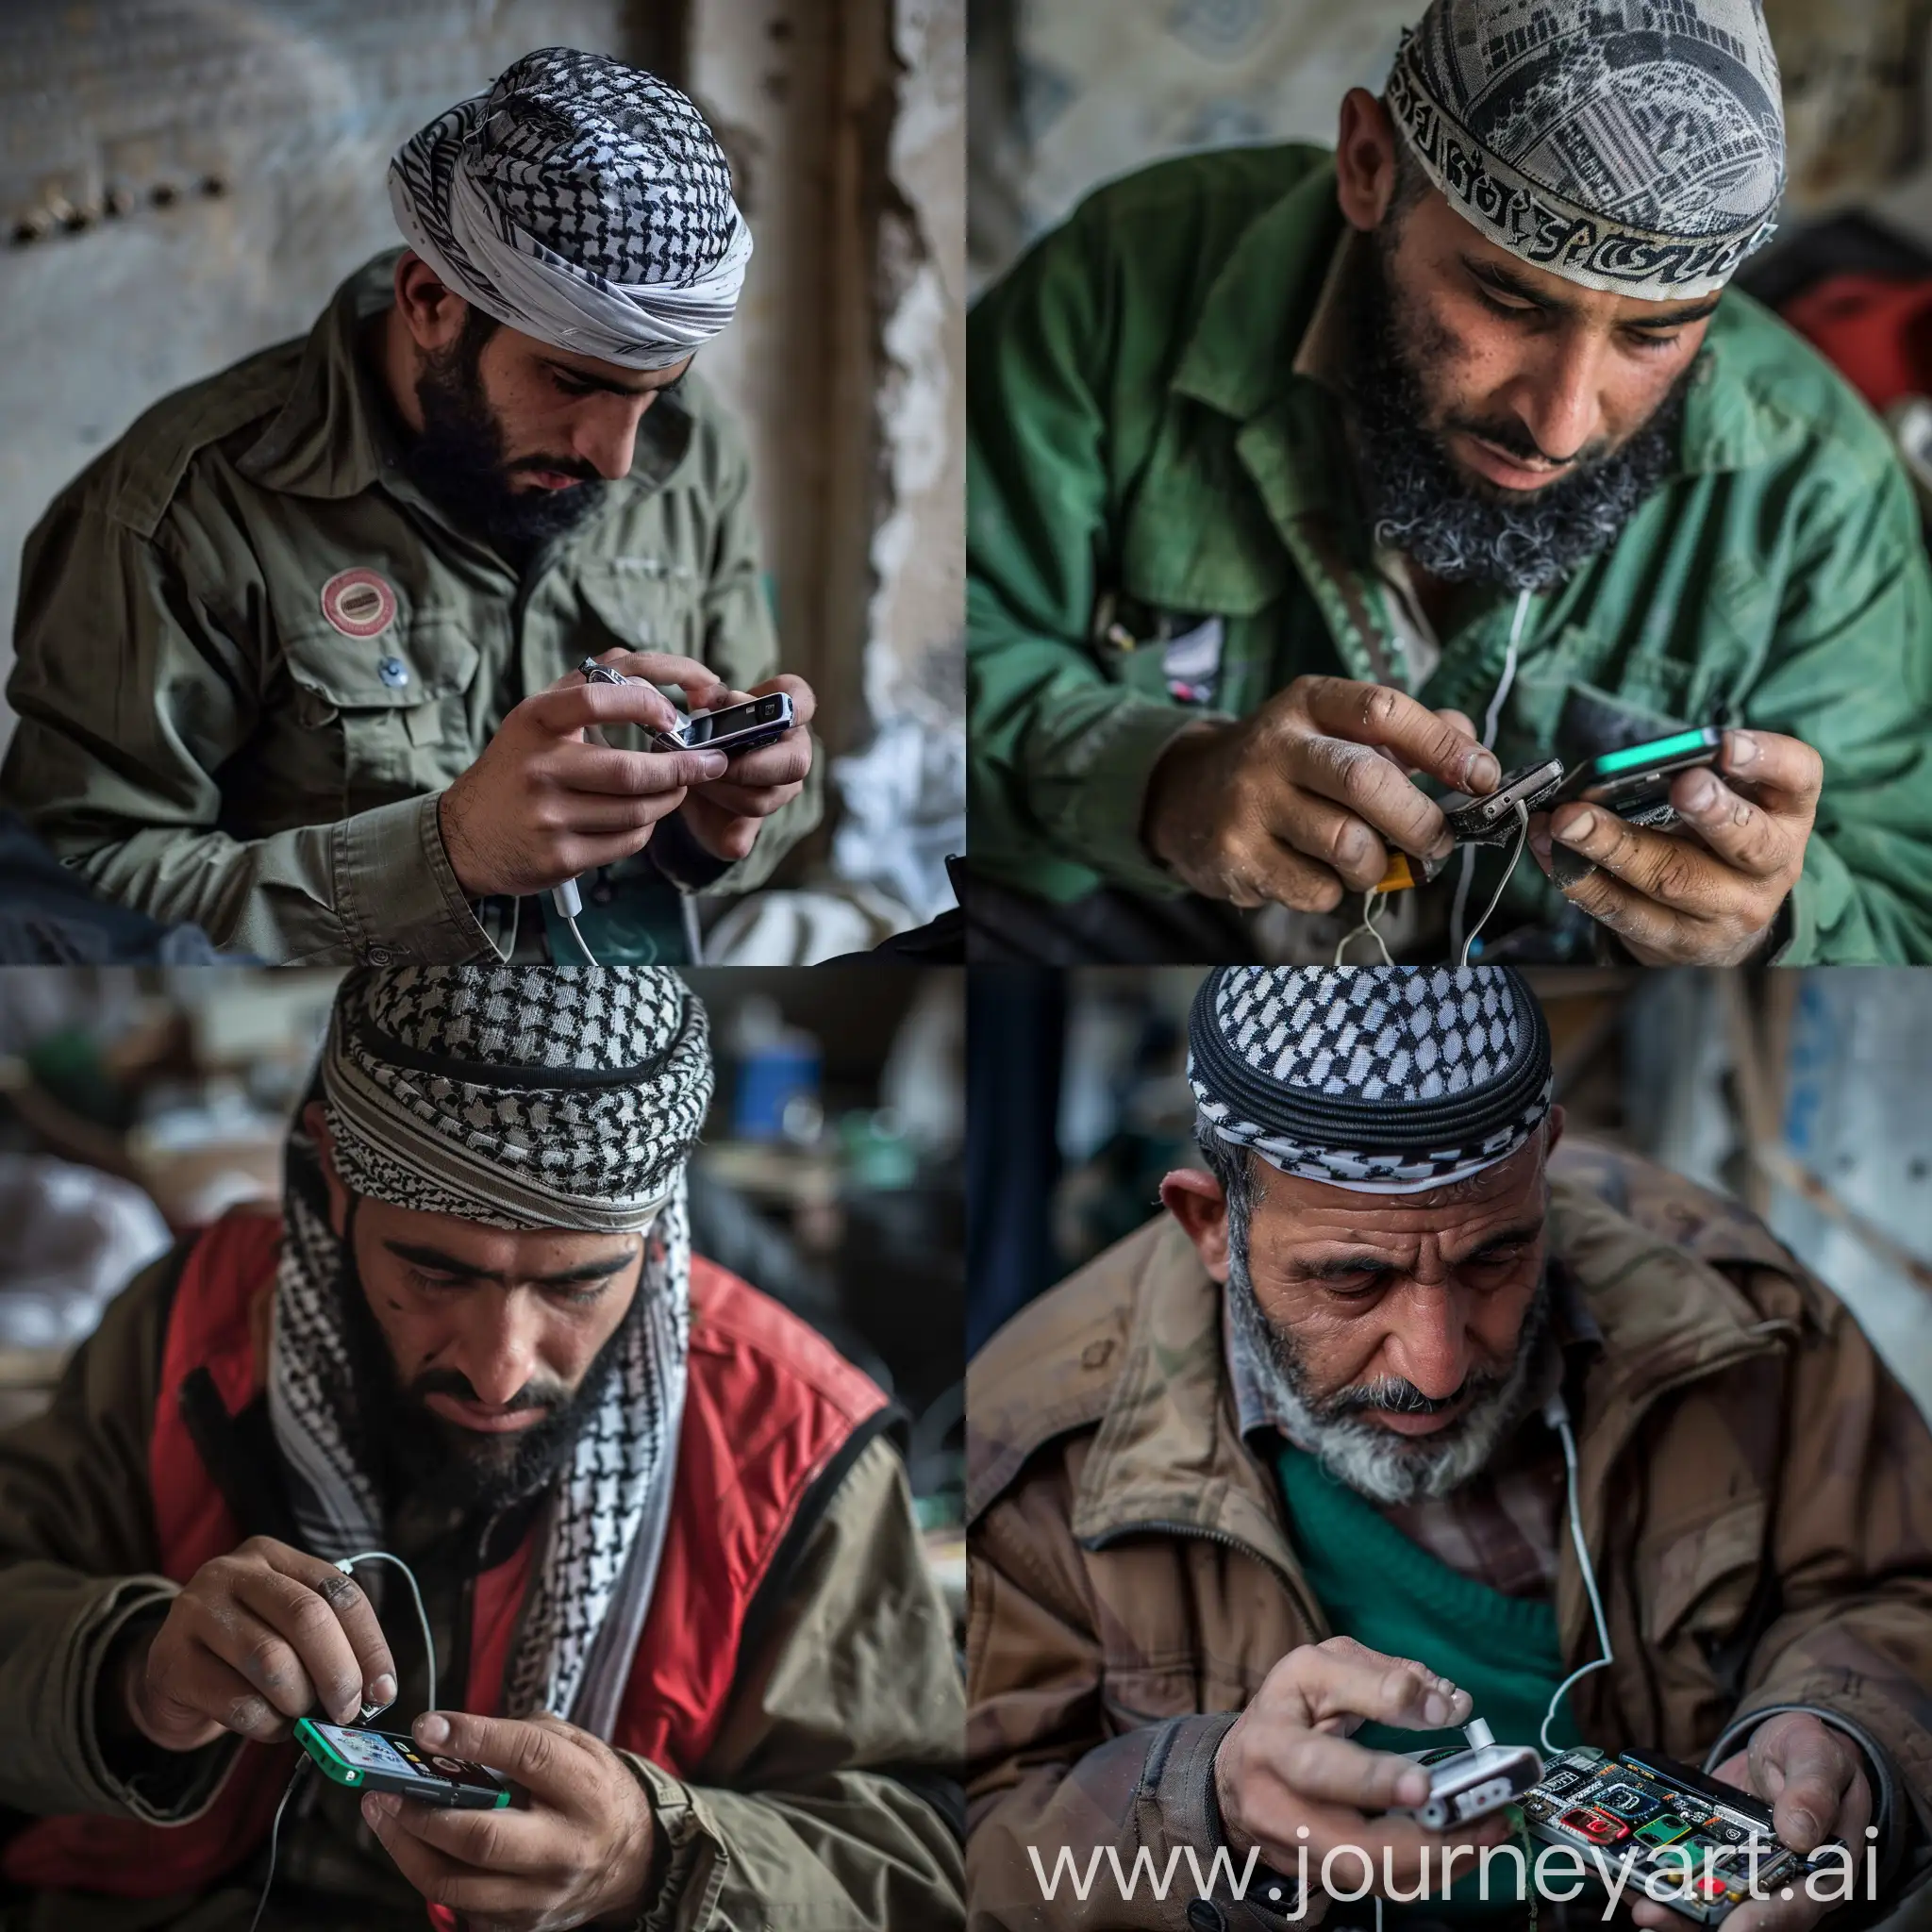 Abu Ubaida, spokesman for the Al-Qassam Brigades, repairs phones